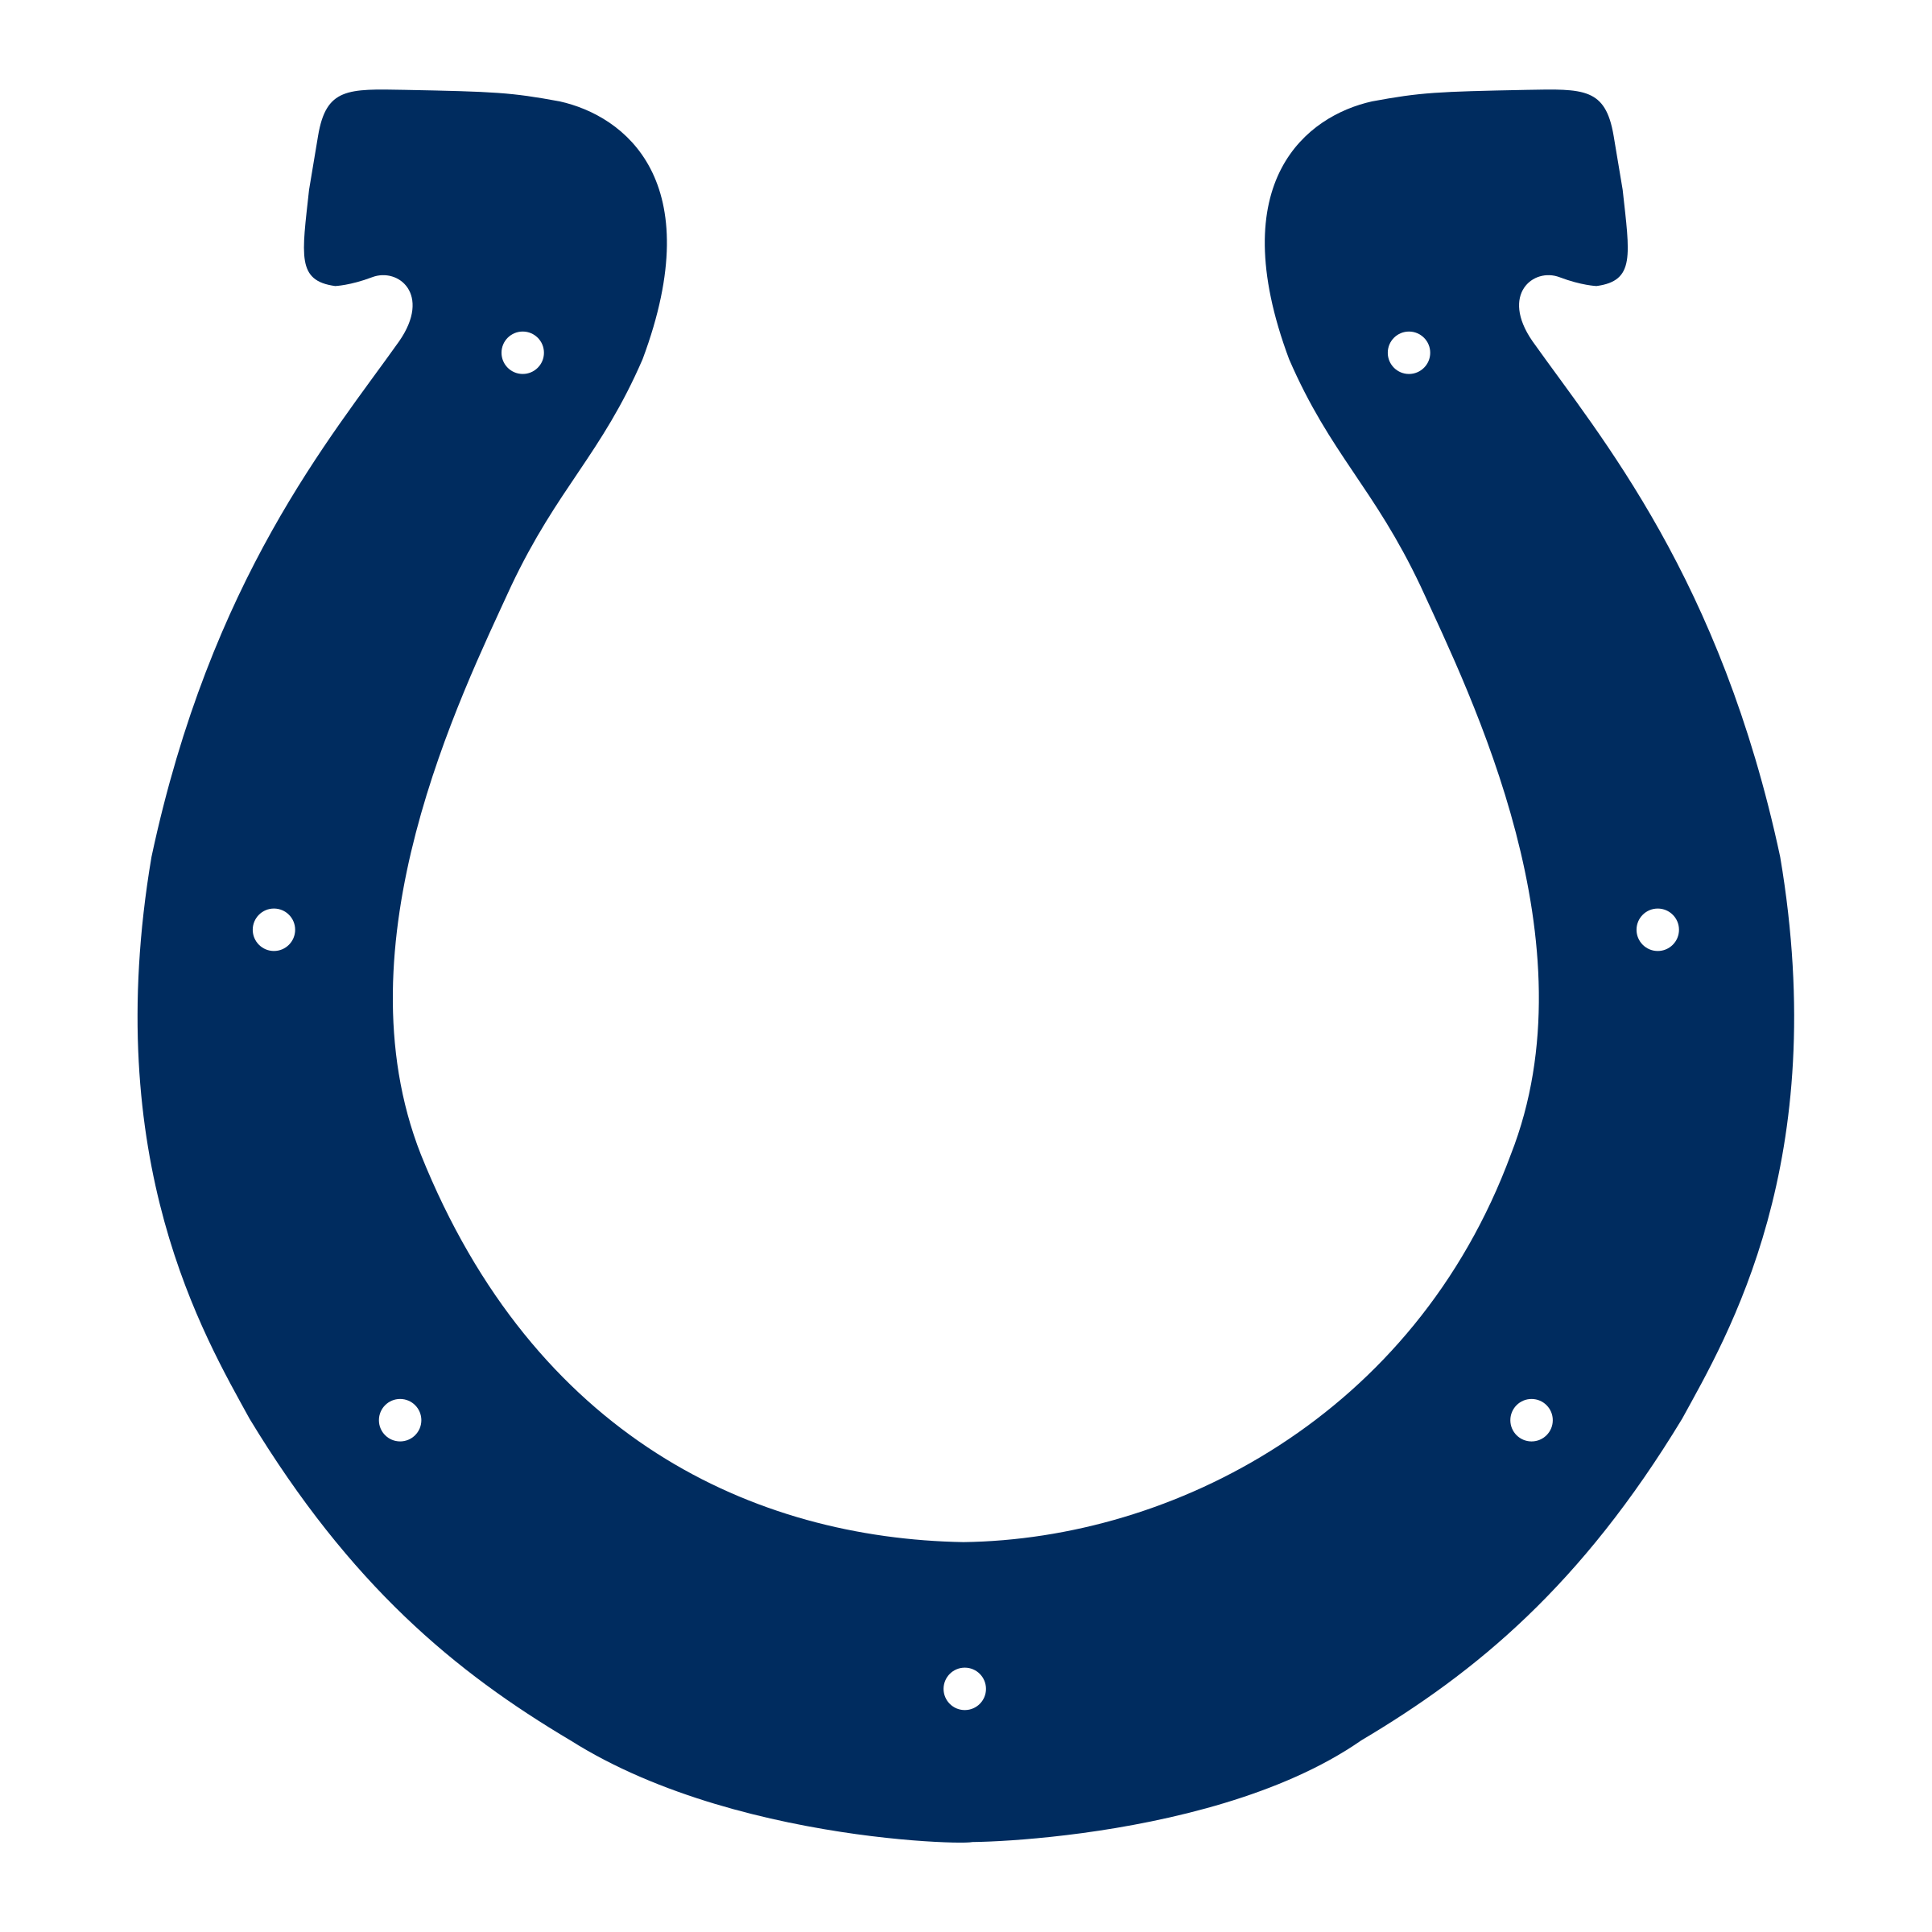 Colts Horseshoe Logo - Indianapolis Colts Logo PNG Transparent & SVG Vector - Freebie Supply